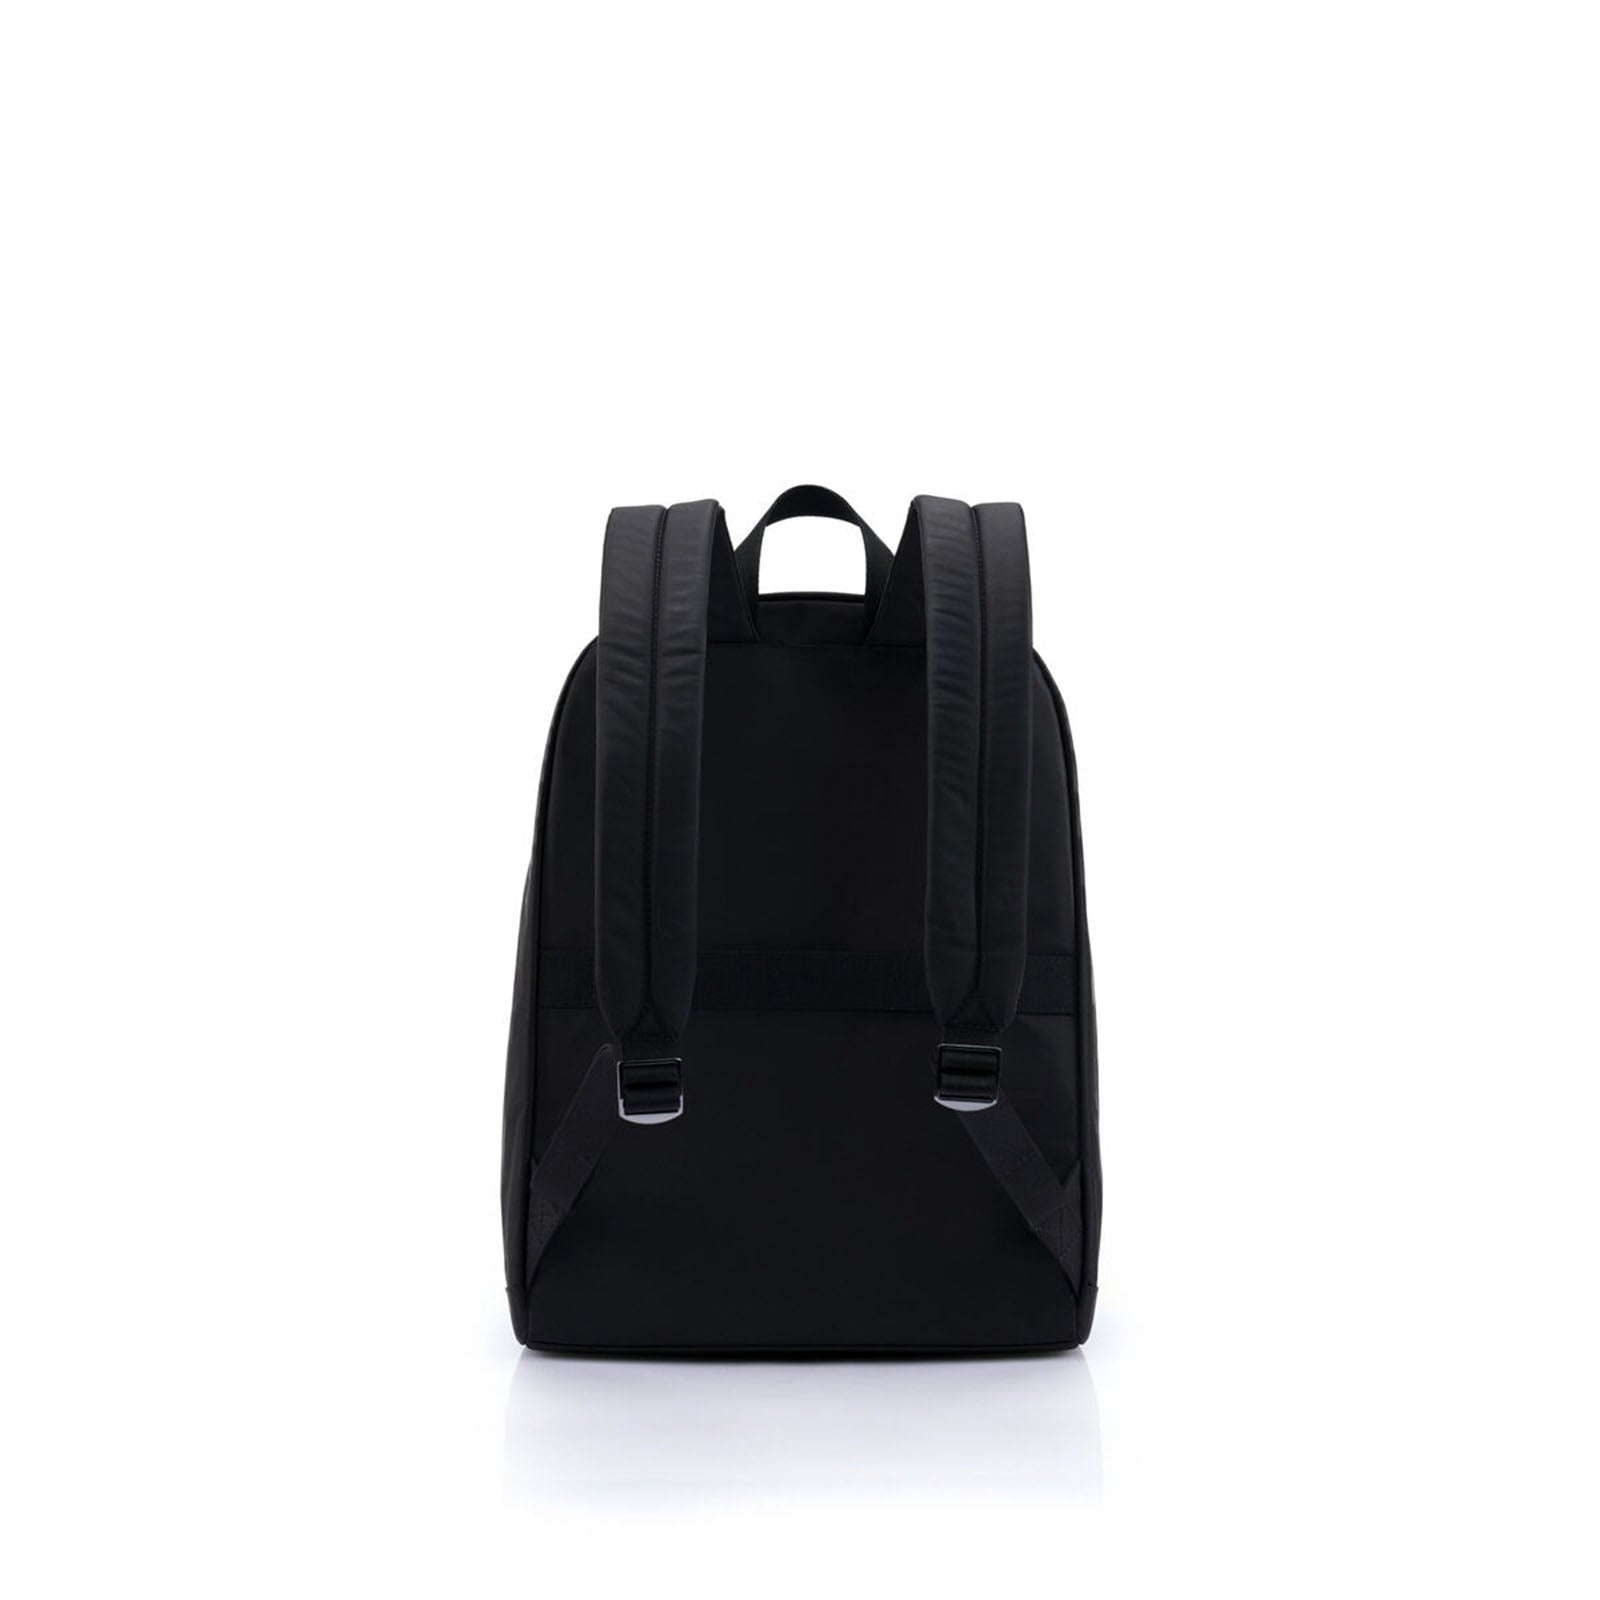 Samsonite-Mobile-Solutions-Backpack-Black-Back